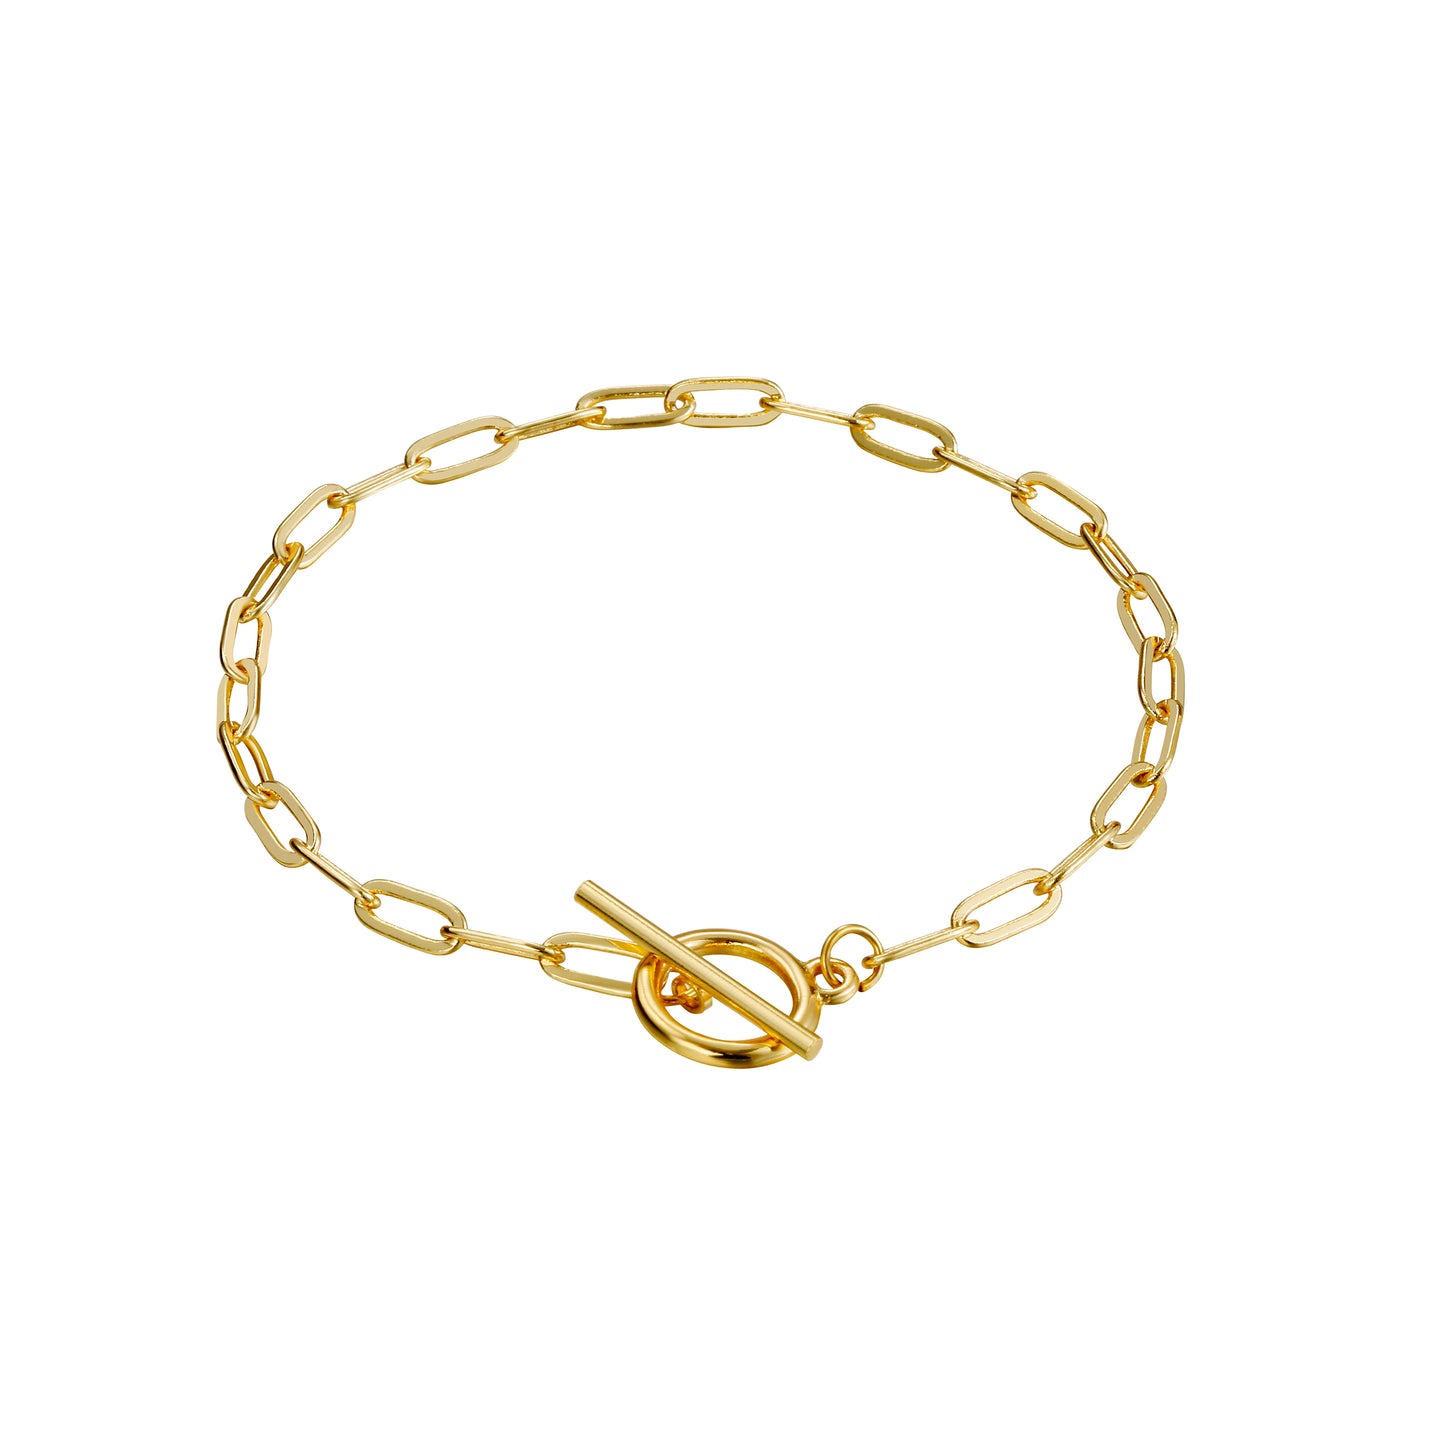 TASISO 14K Gold Plated Toggle Bracelet